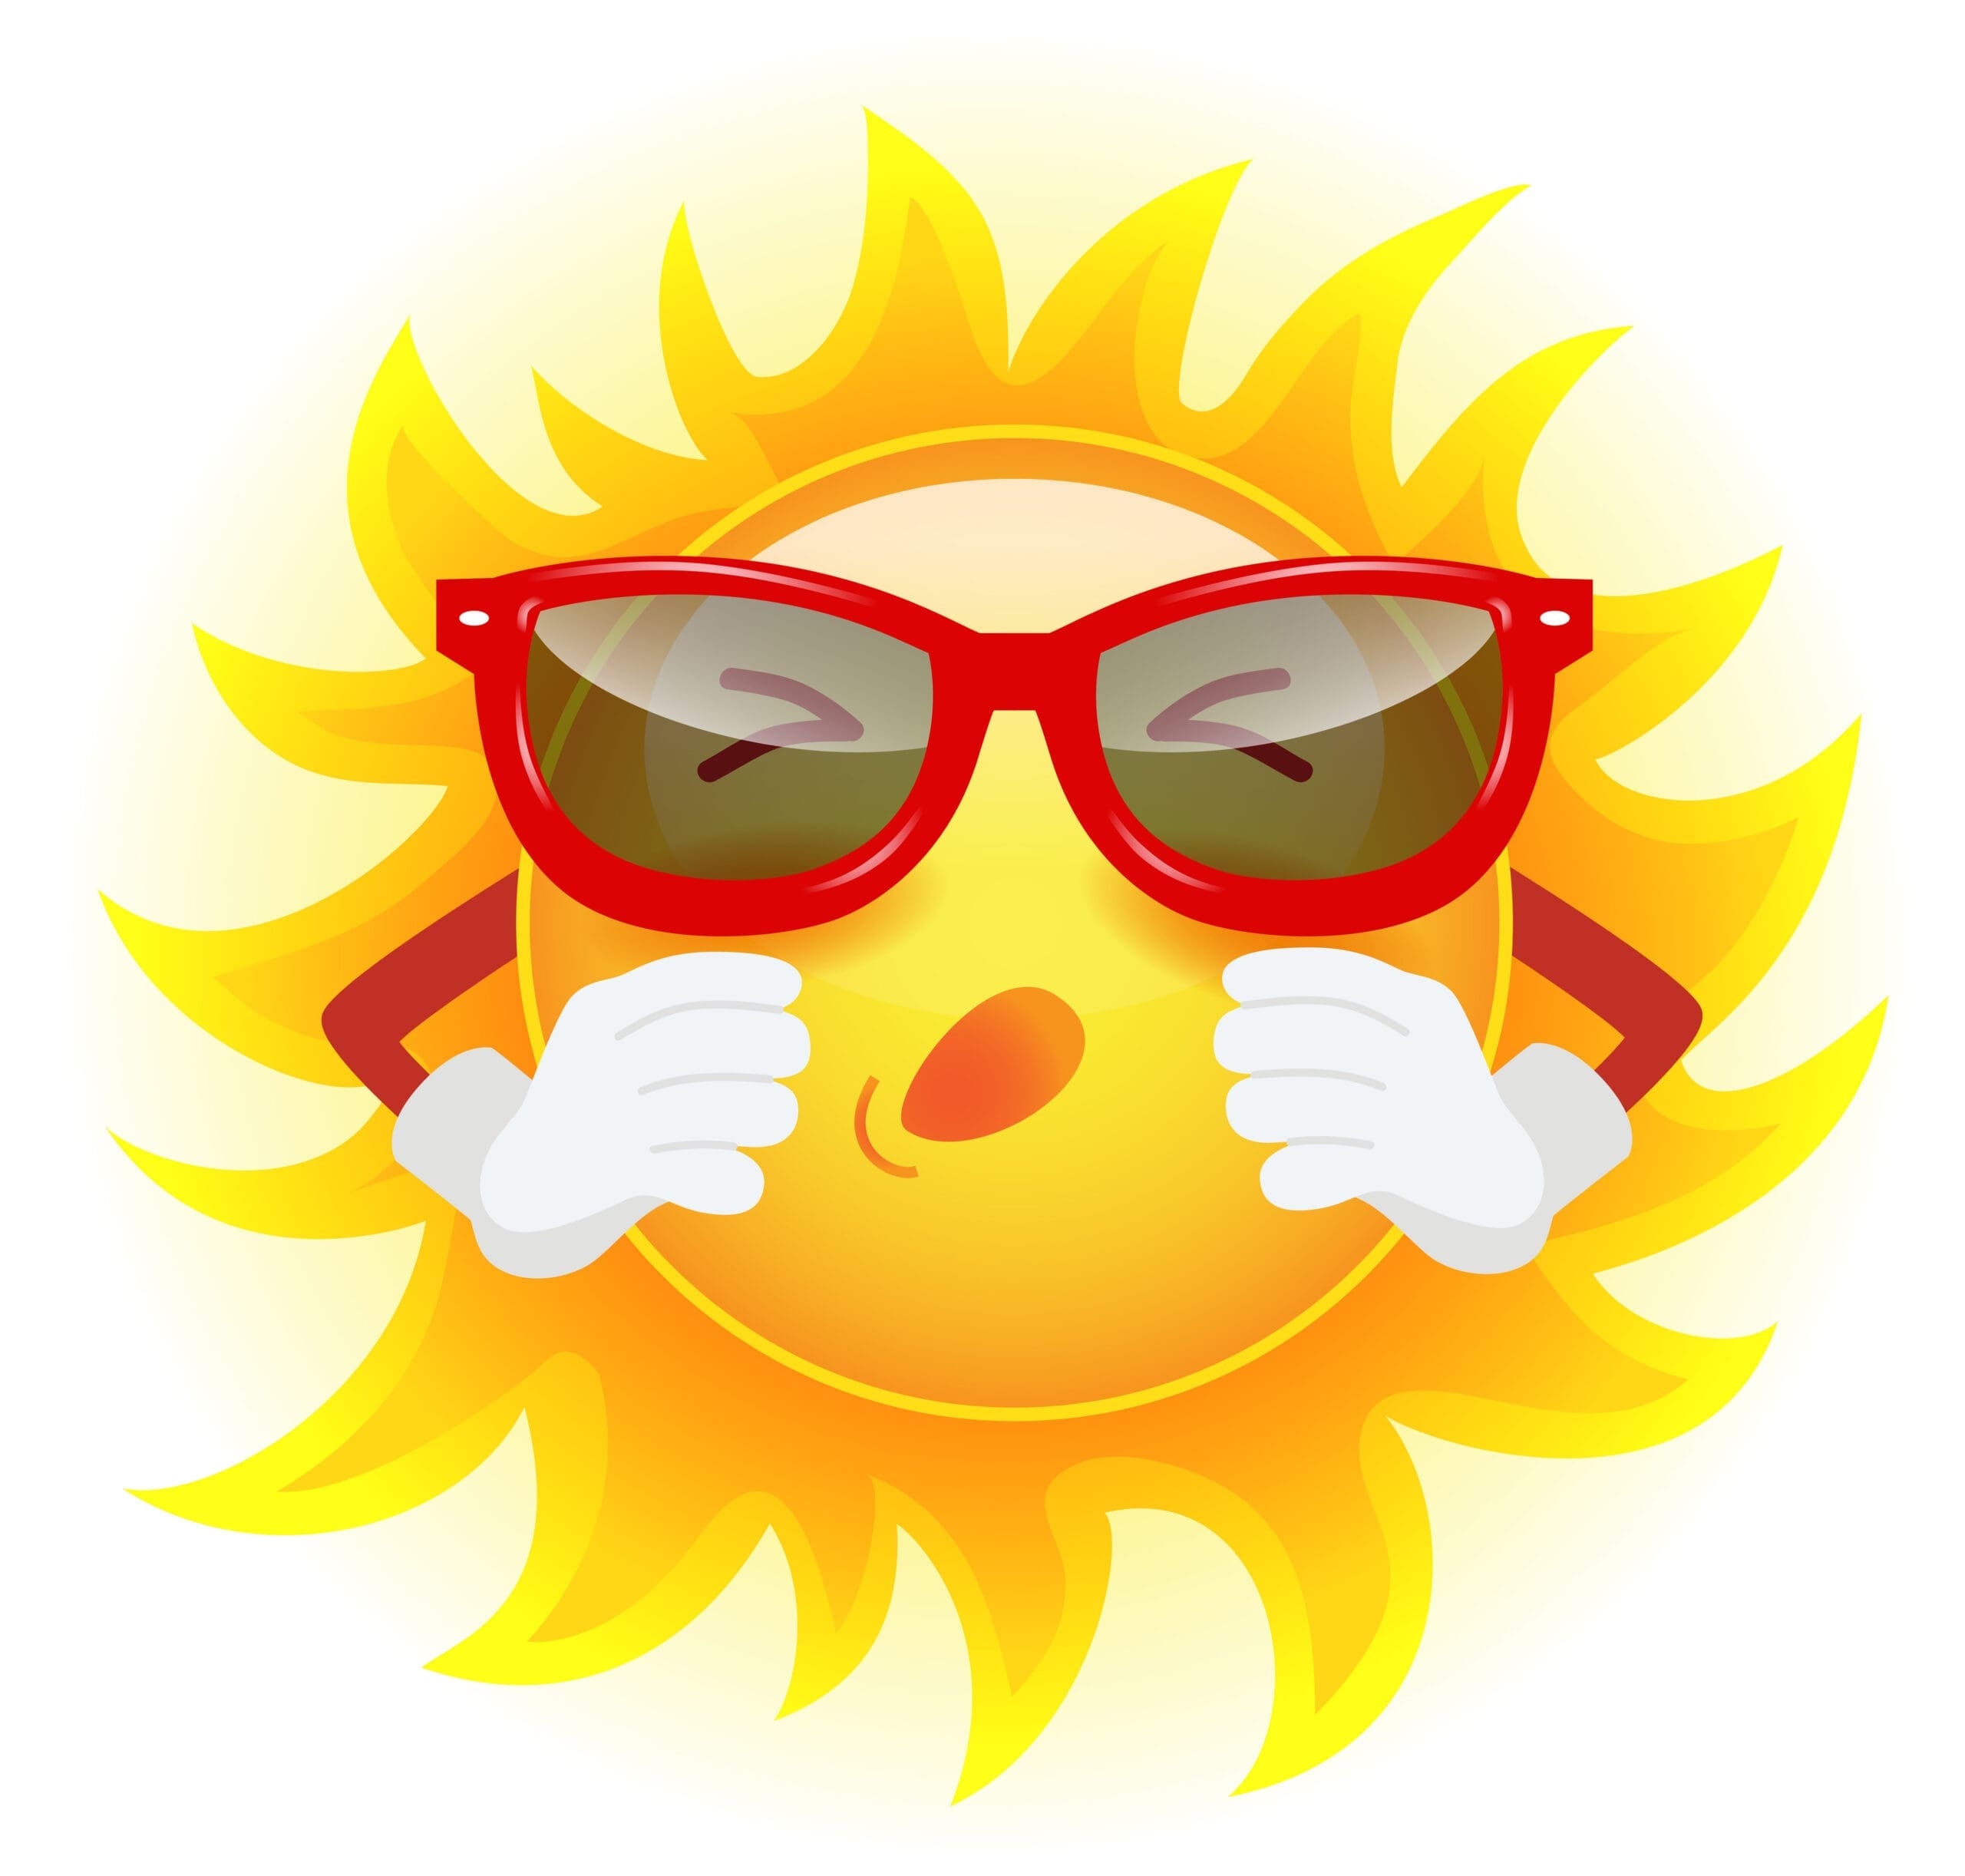 Summer sun in sunglasses sneezing